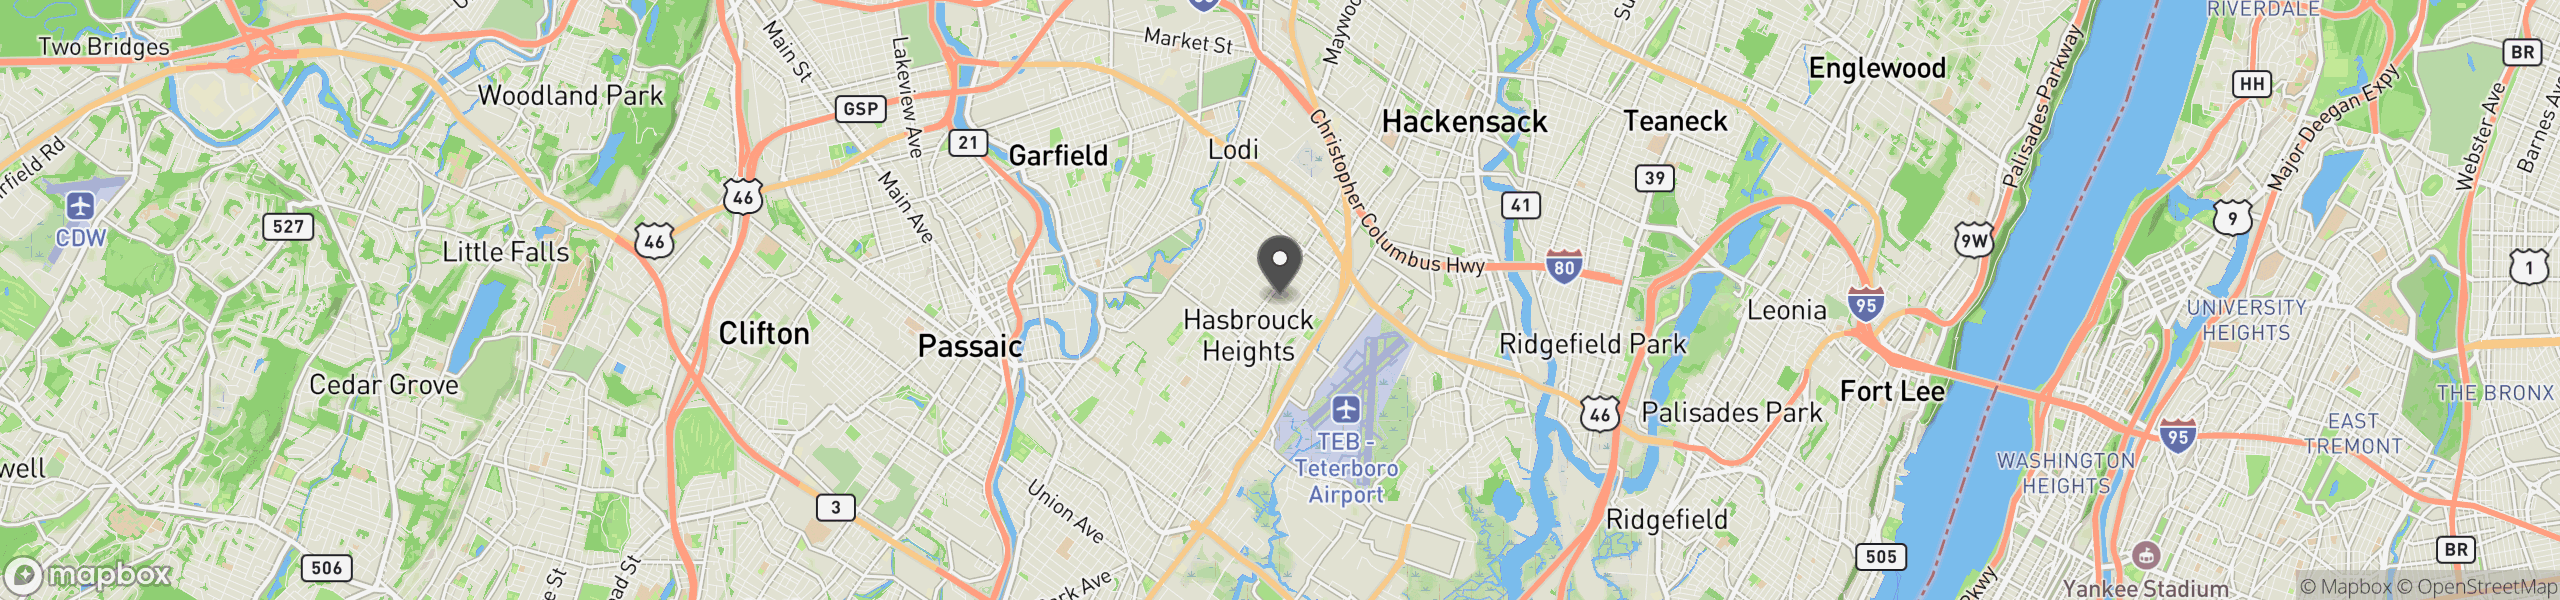 Hasbrouck Heights, NJ